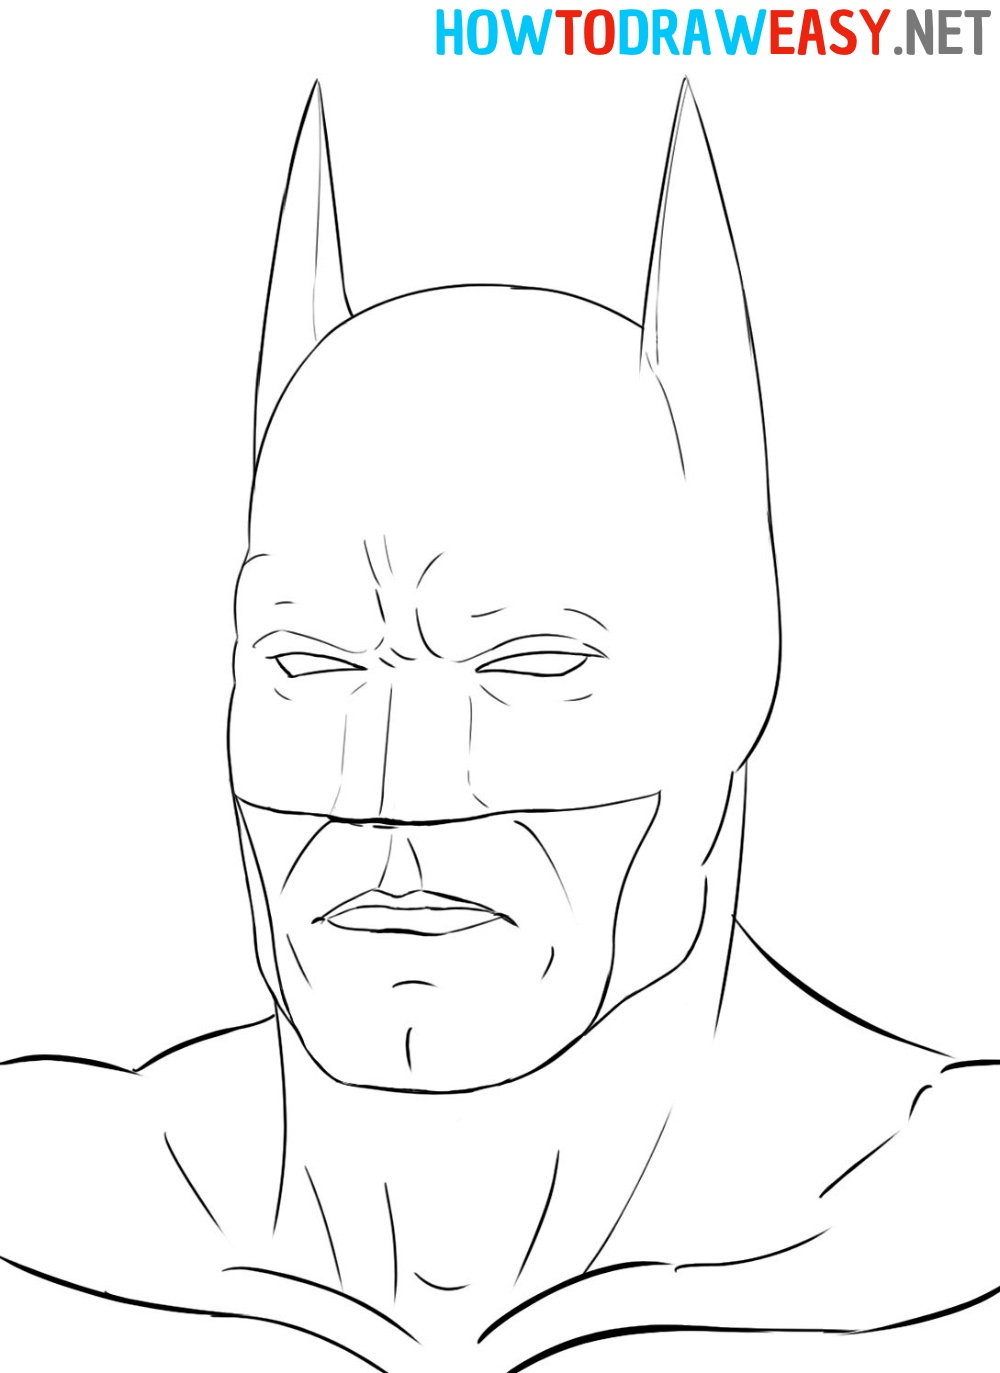 How to Draw Batman's Head